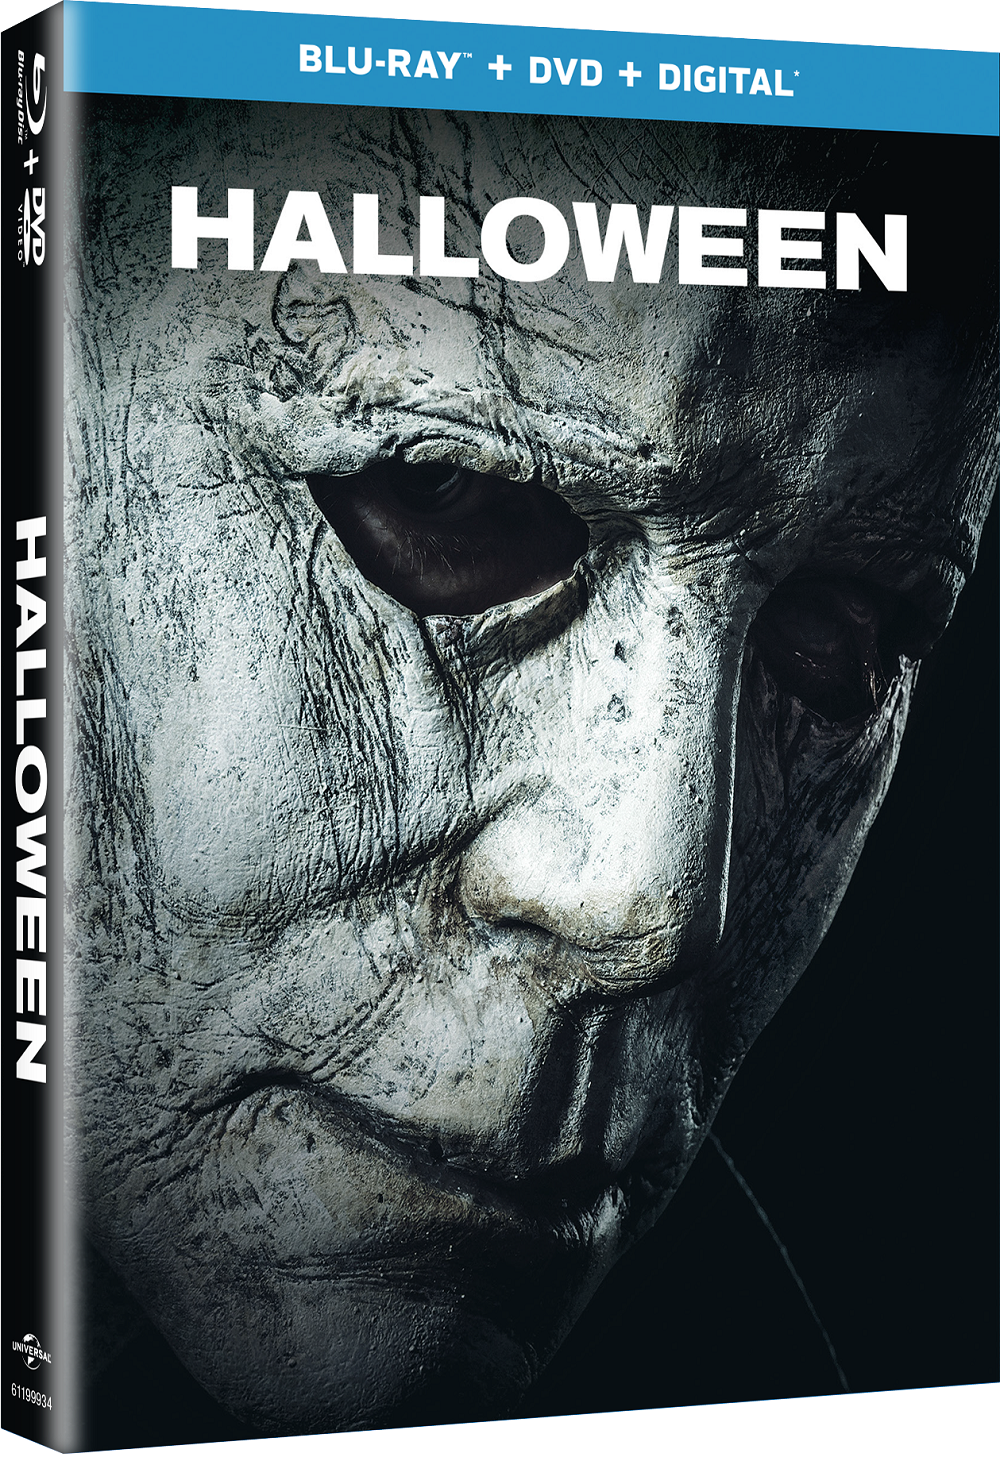 Halloween 2018 Digital 4K Blu-ray DVD release